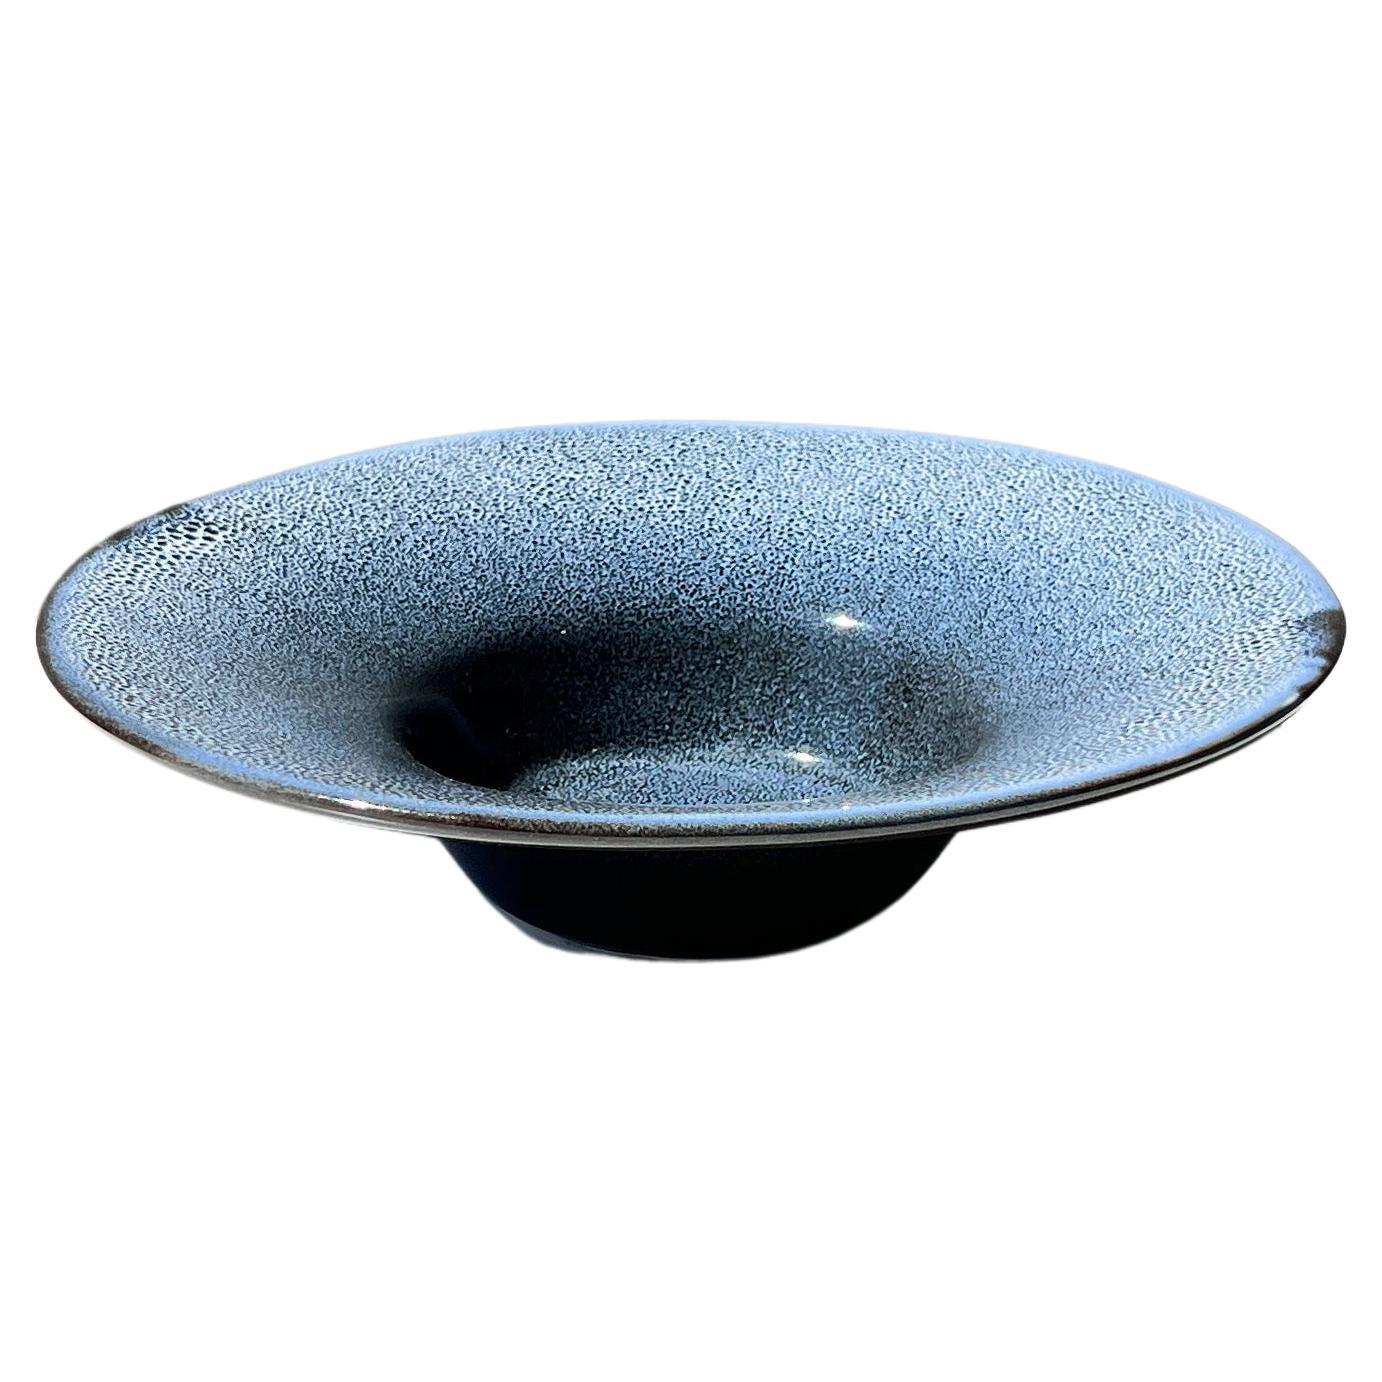 Indigo Handmade Stoneware Serving Bowl in White and Navy Glaze For Sale